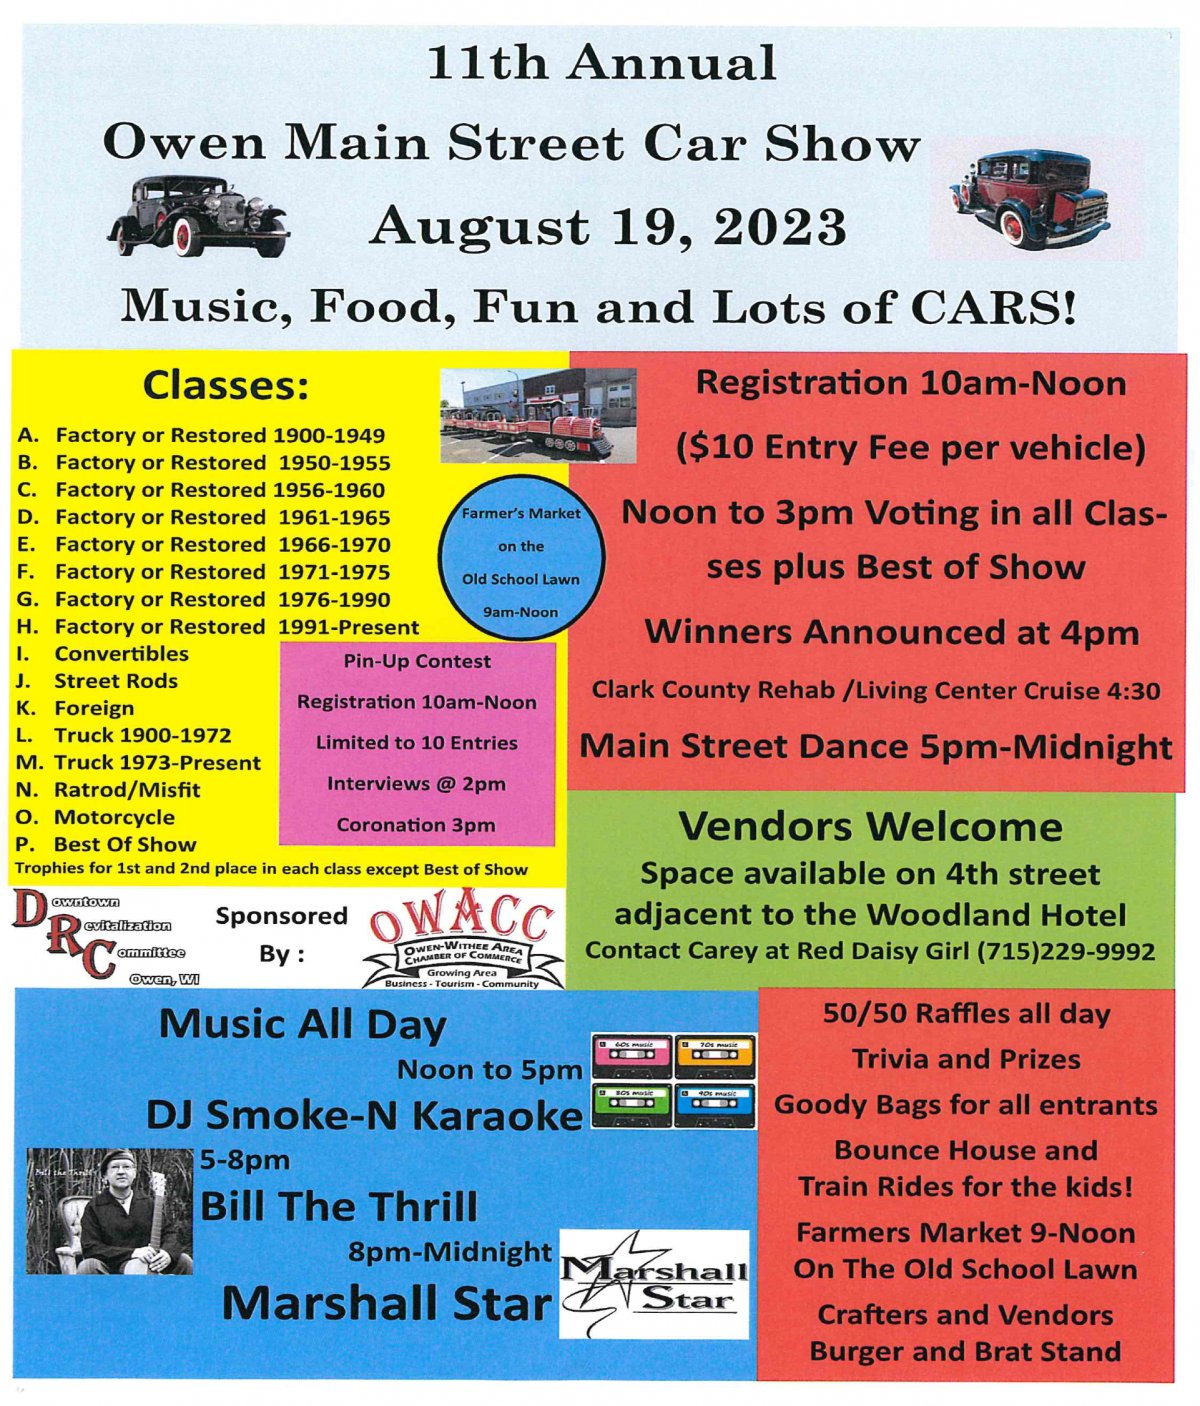 Owen Main Street Car Show